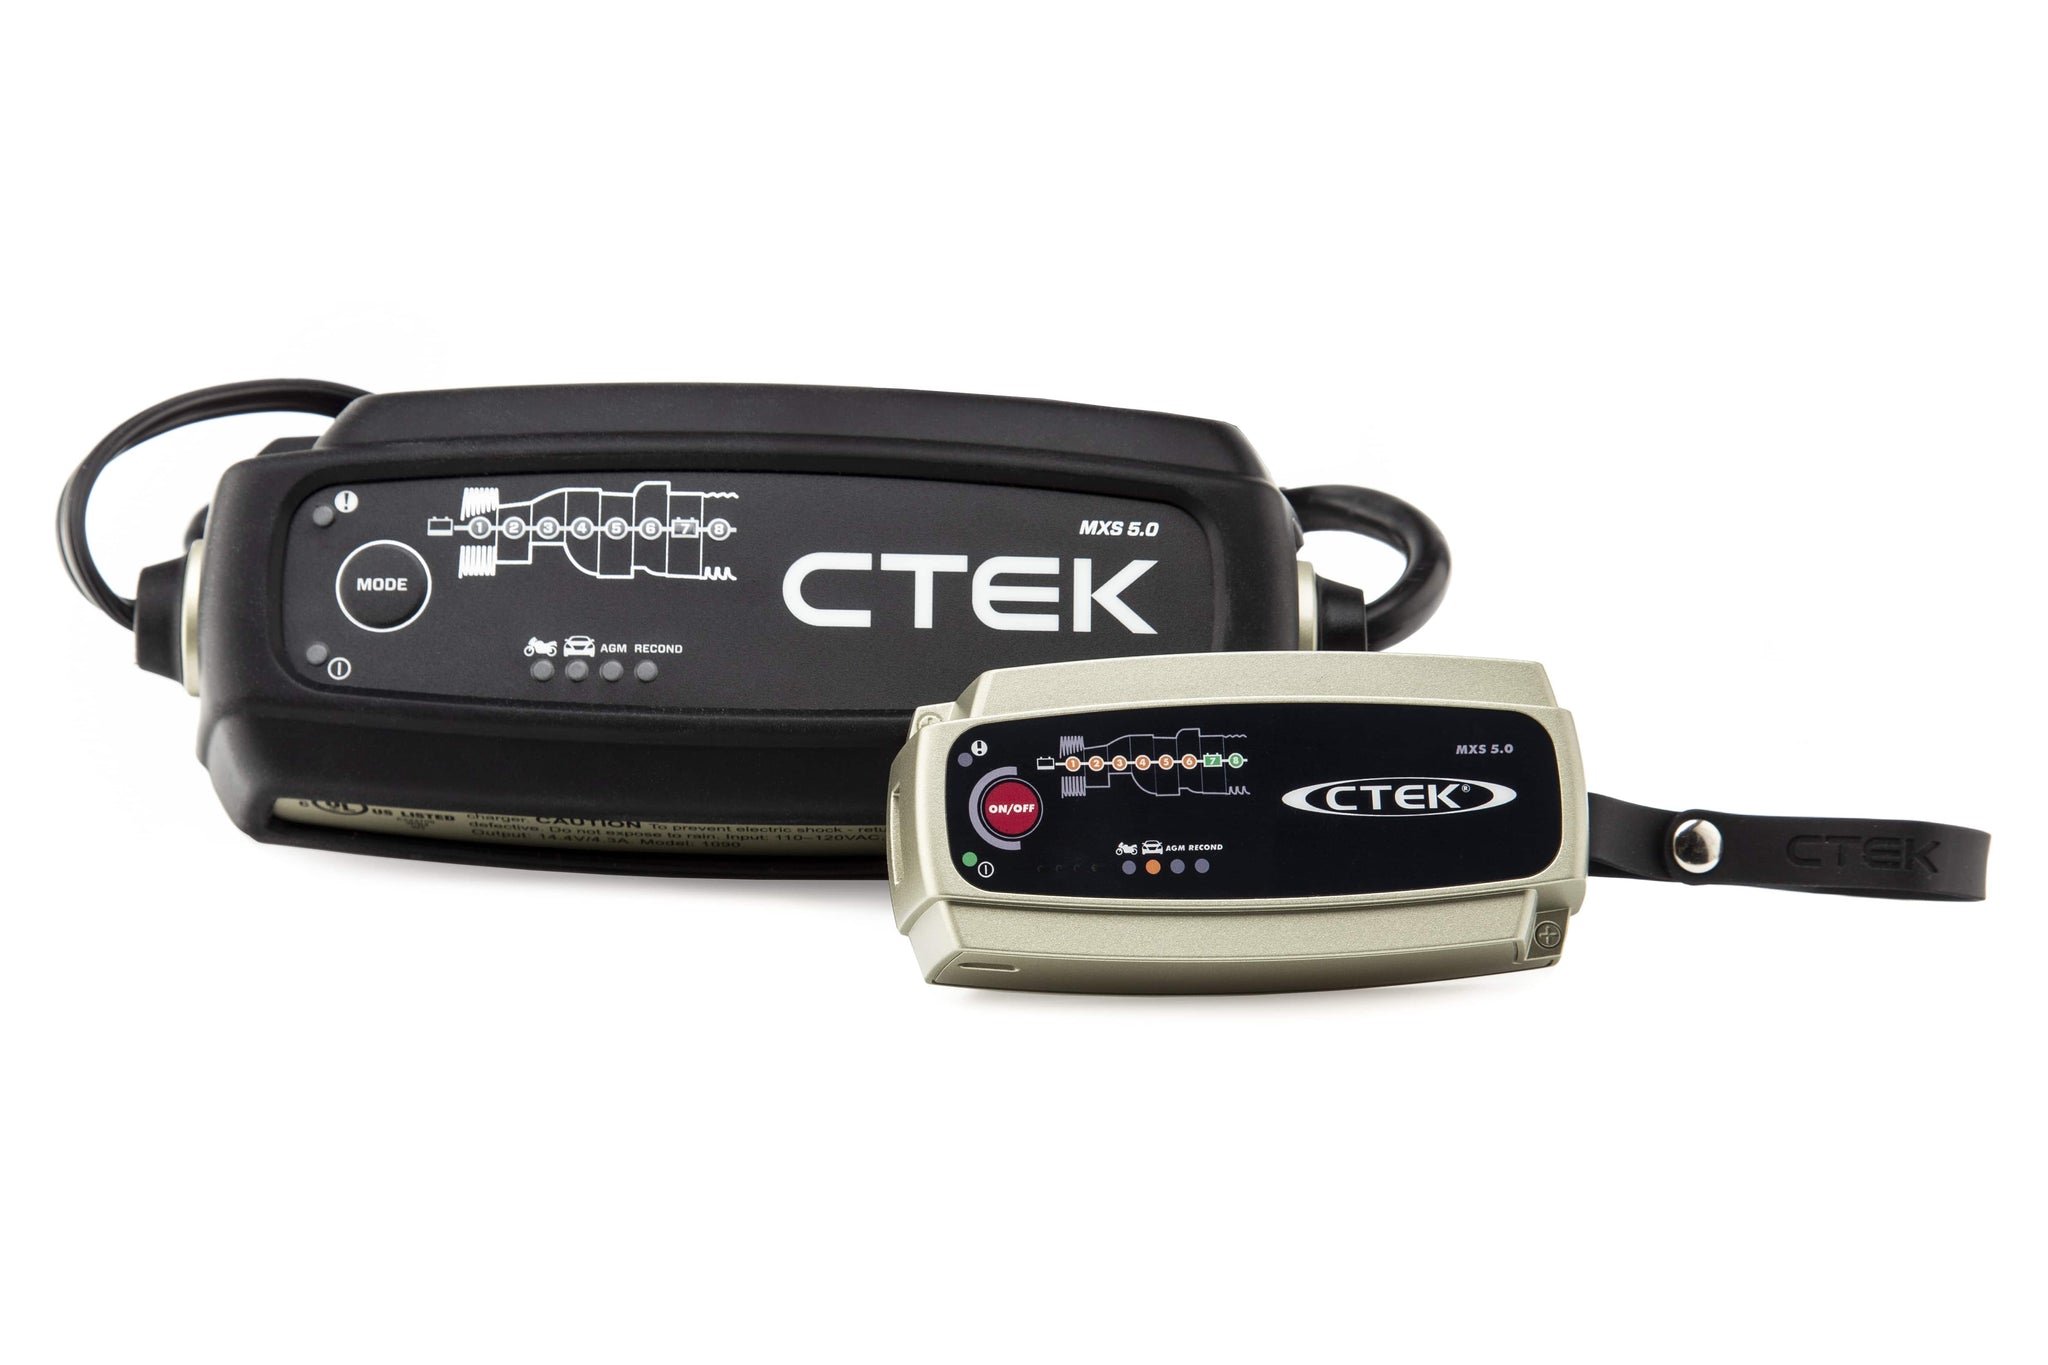 CTEK MXS 5.0 Battery Test & Charger - Now 21% Savings